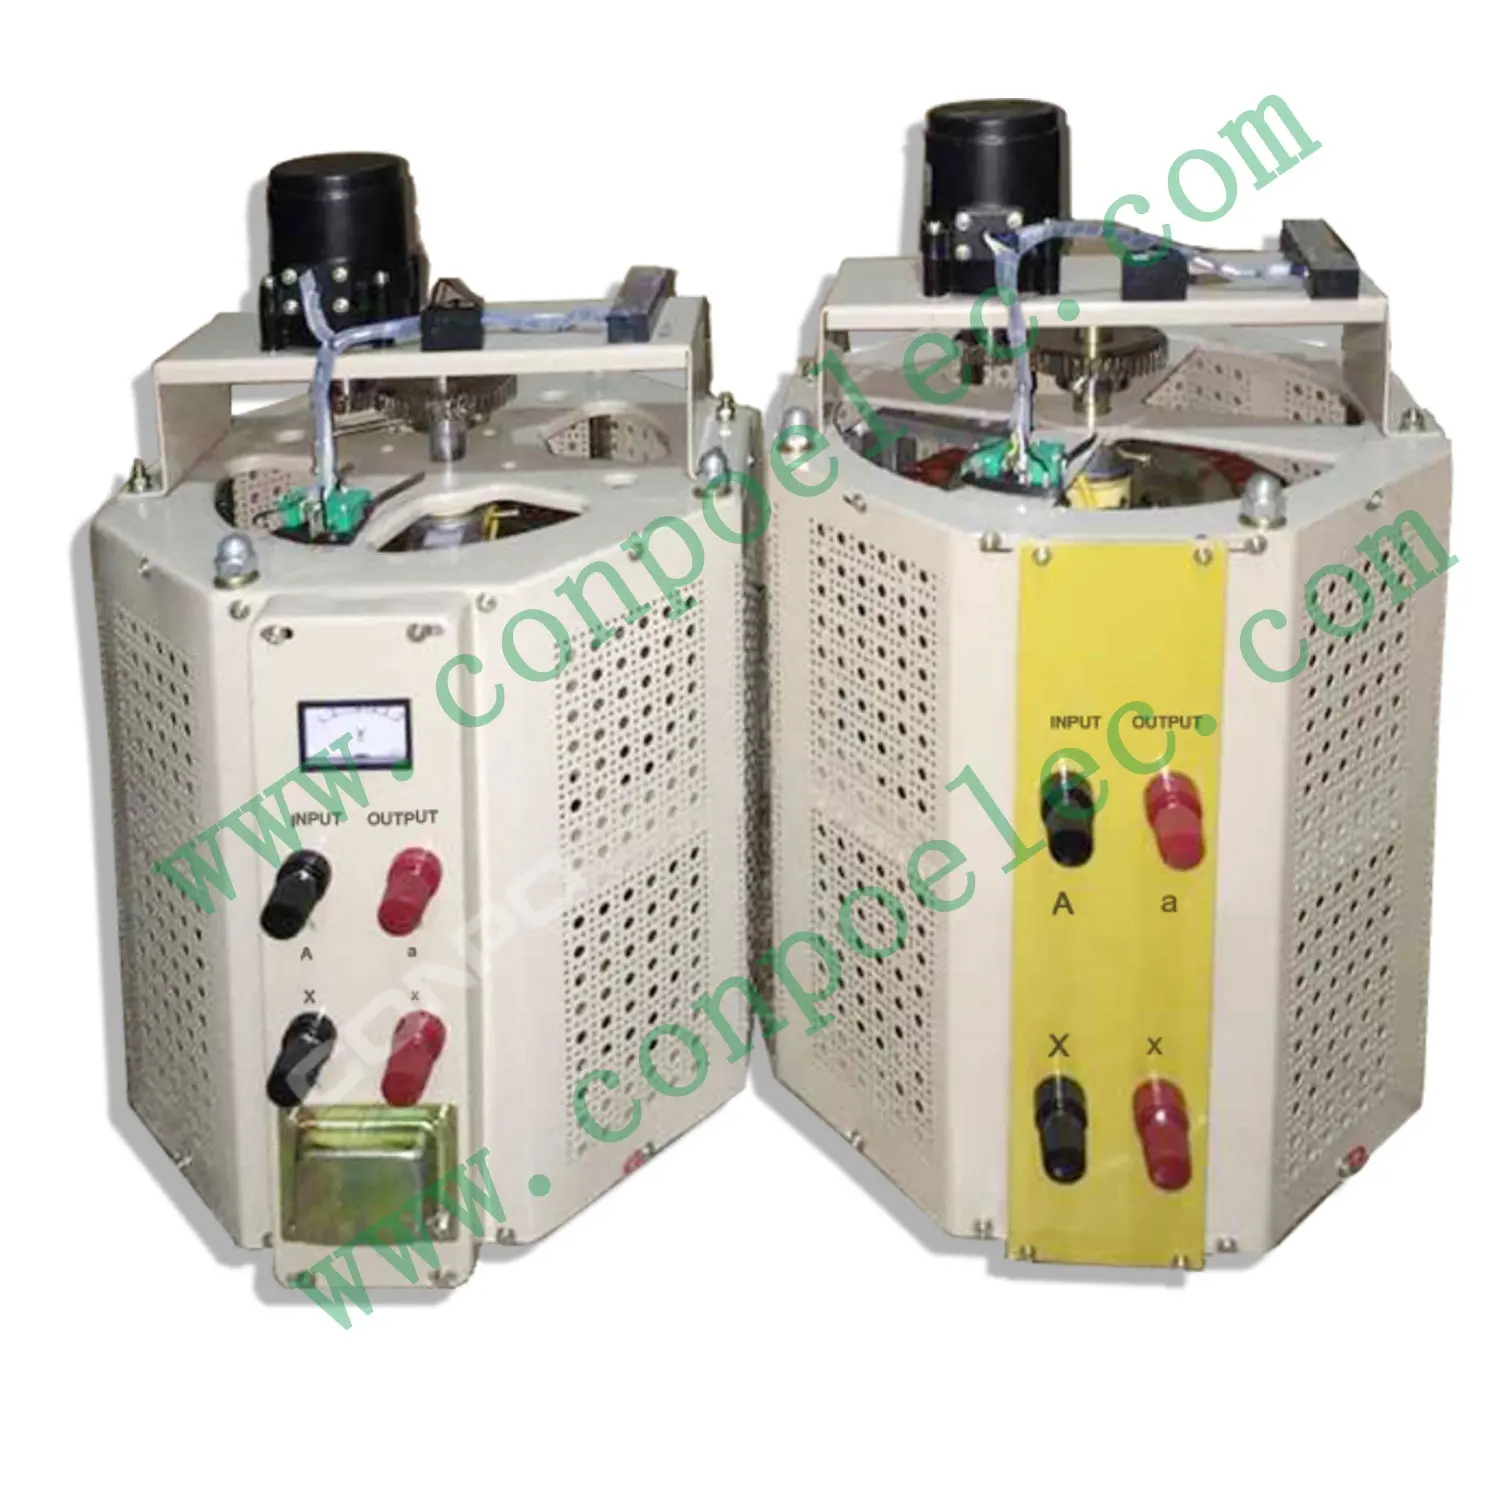 Transformador de motor elétrico variável, transformador para variação de voltagem, transformador automático, regulador de voltagem, TDGC2-0.5/1/2/3/5/7/10/15/20/30kva